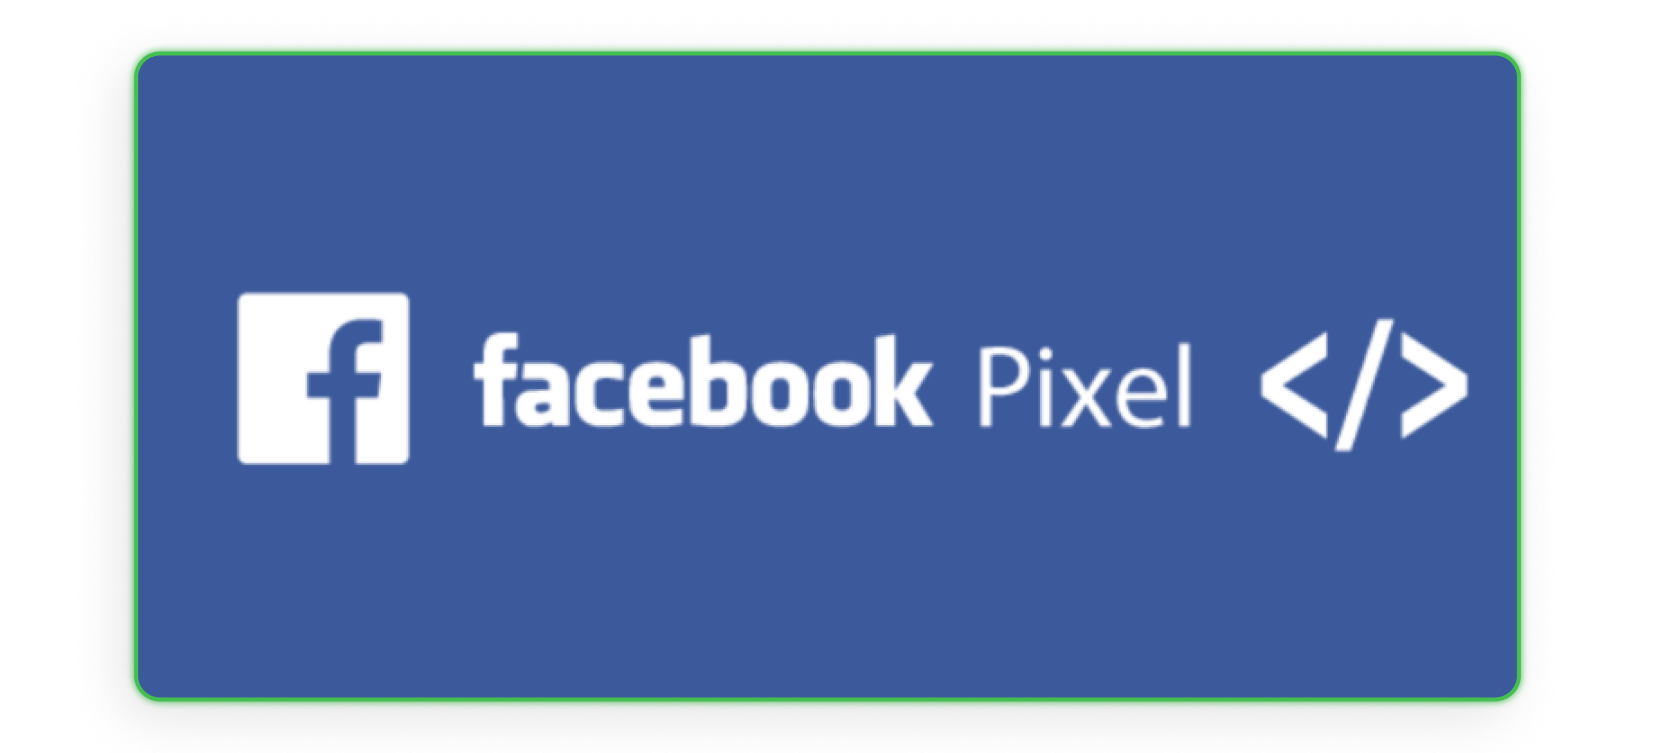 Chrome extension for publishers - Facebook Pixel Helper